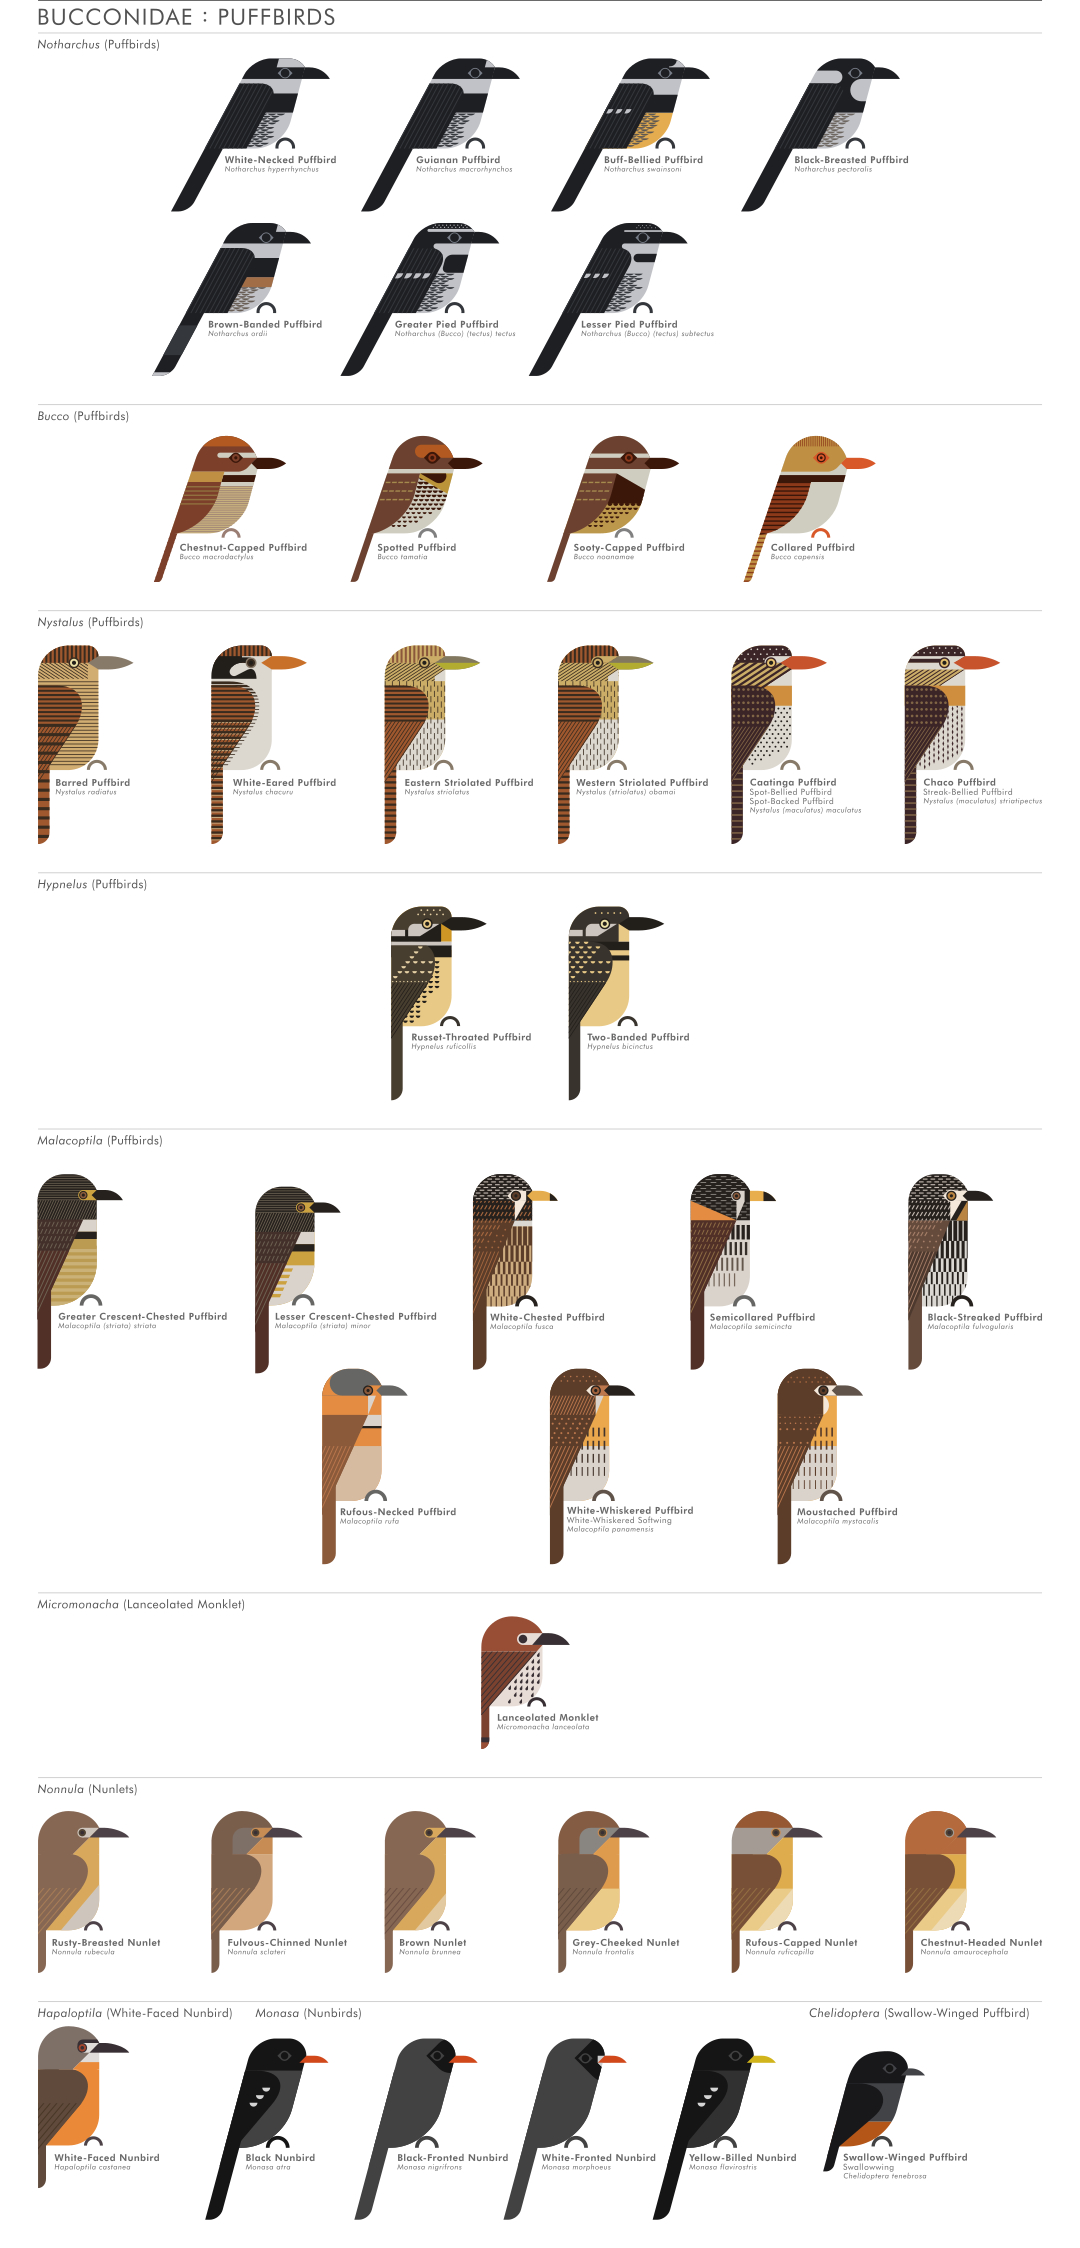 scott partridge - ave - avian vector encyclopedia - puffbirds Bucconidae piciformes - vector bird art